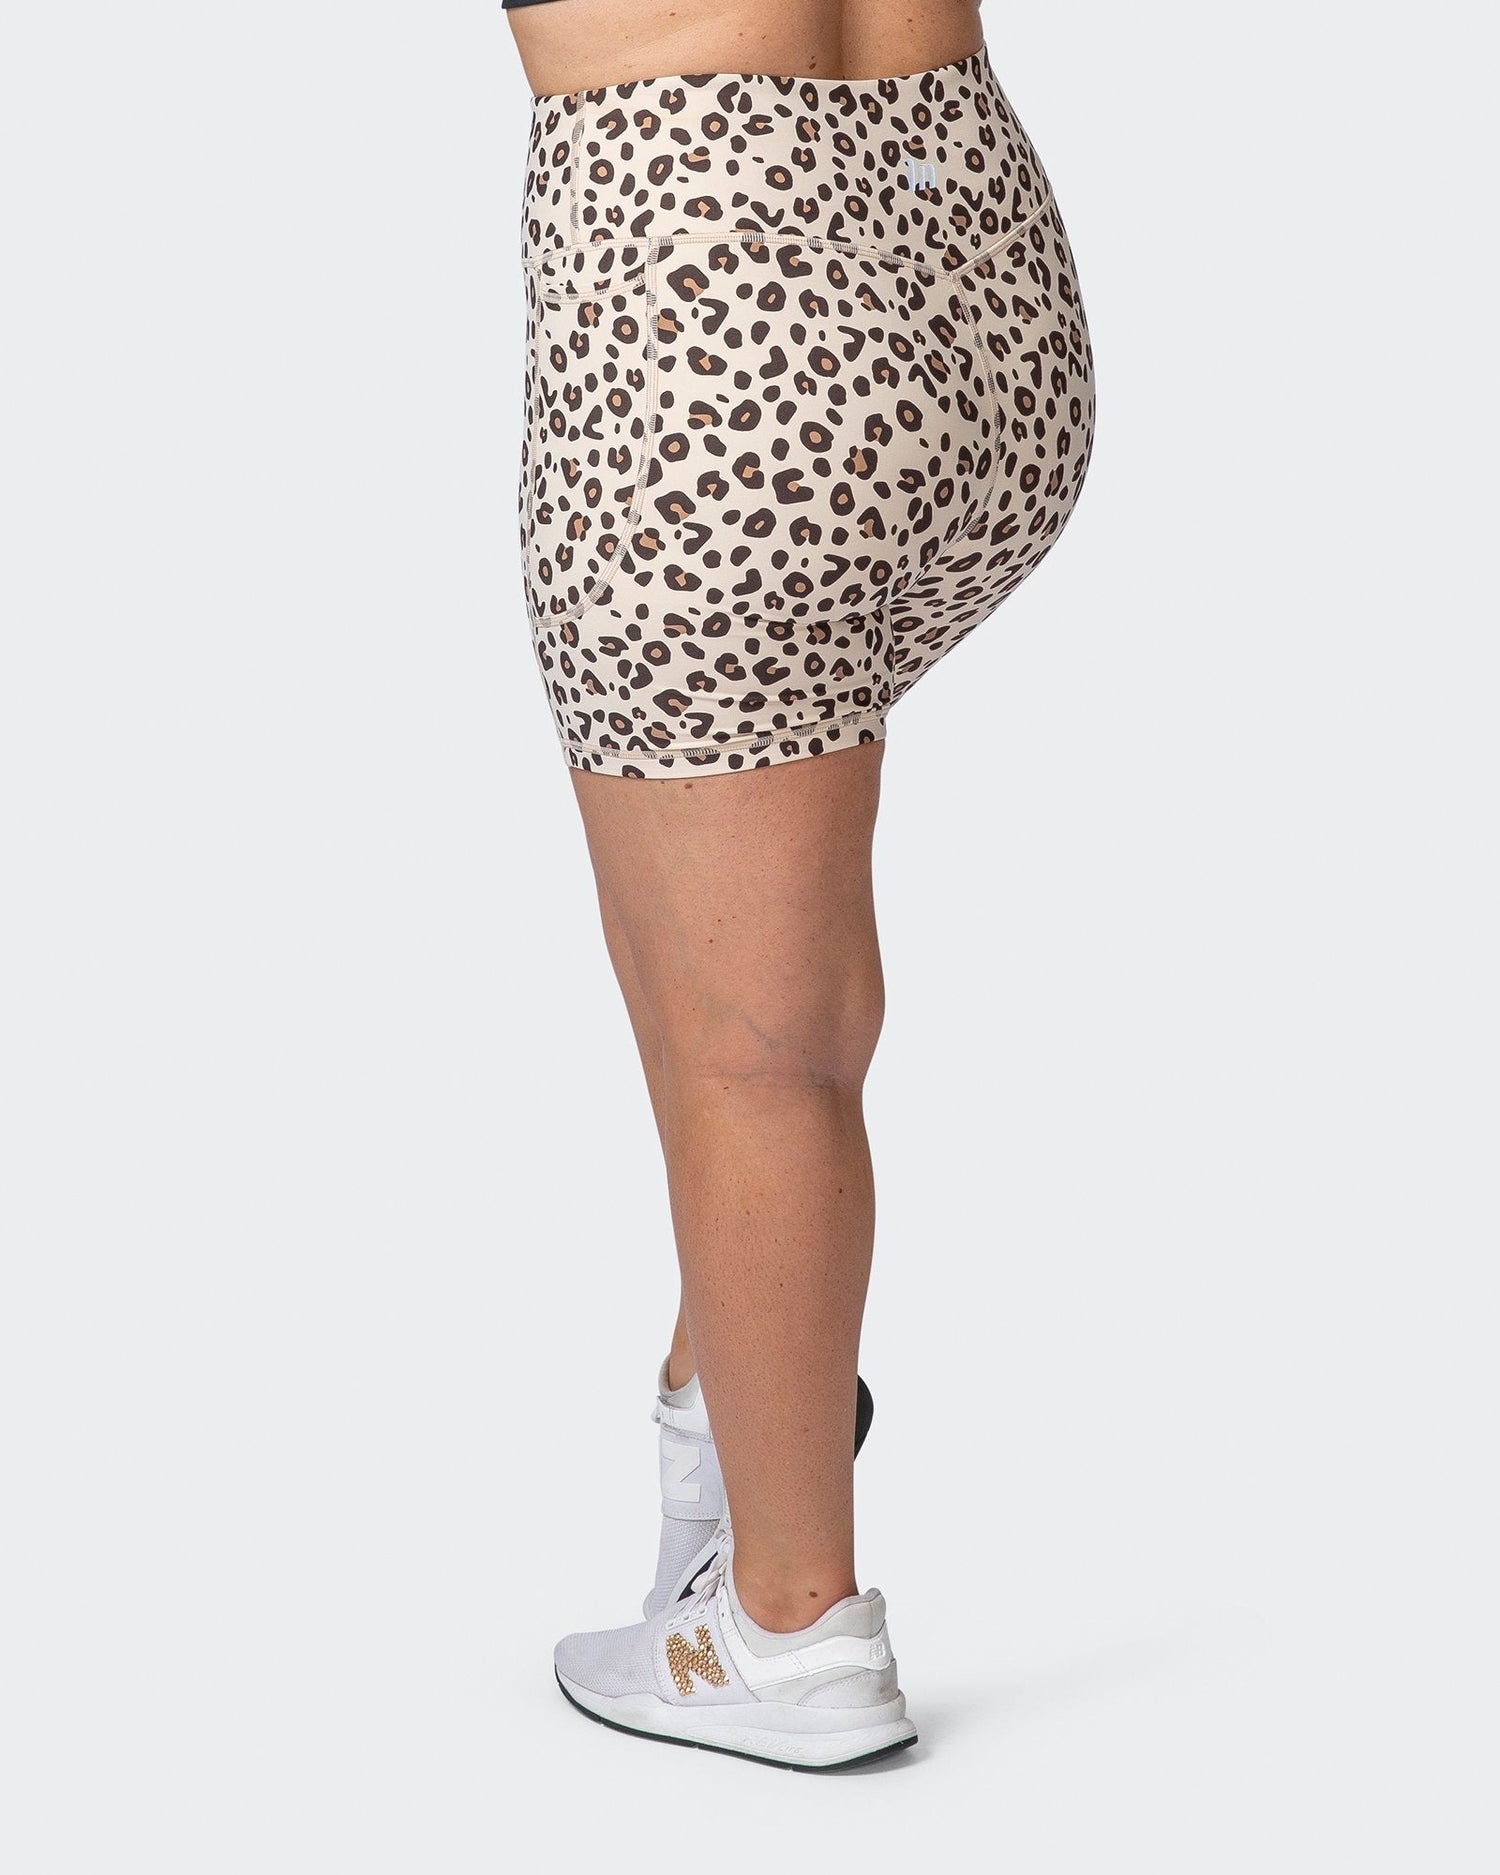 Superior Squat Pocket Bike Shorts - Cheetah Print